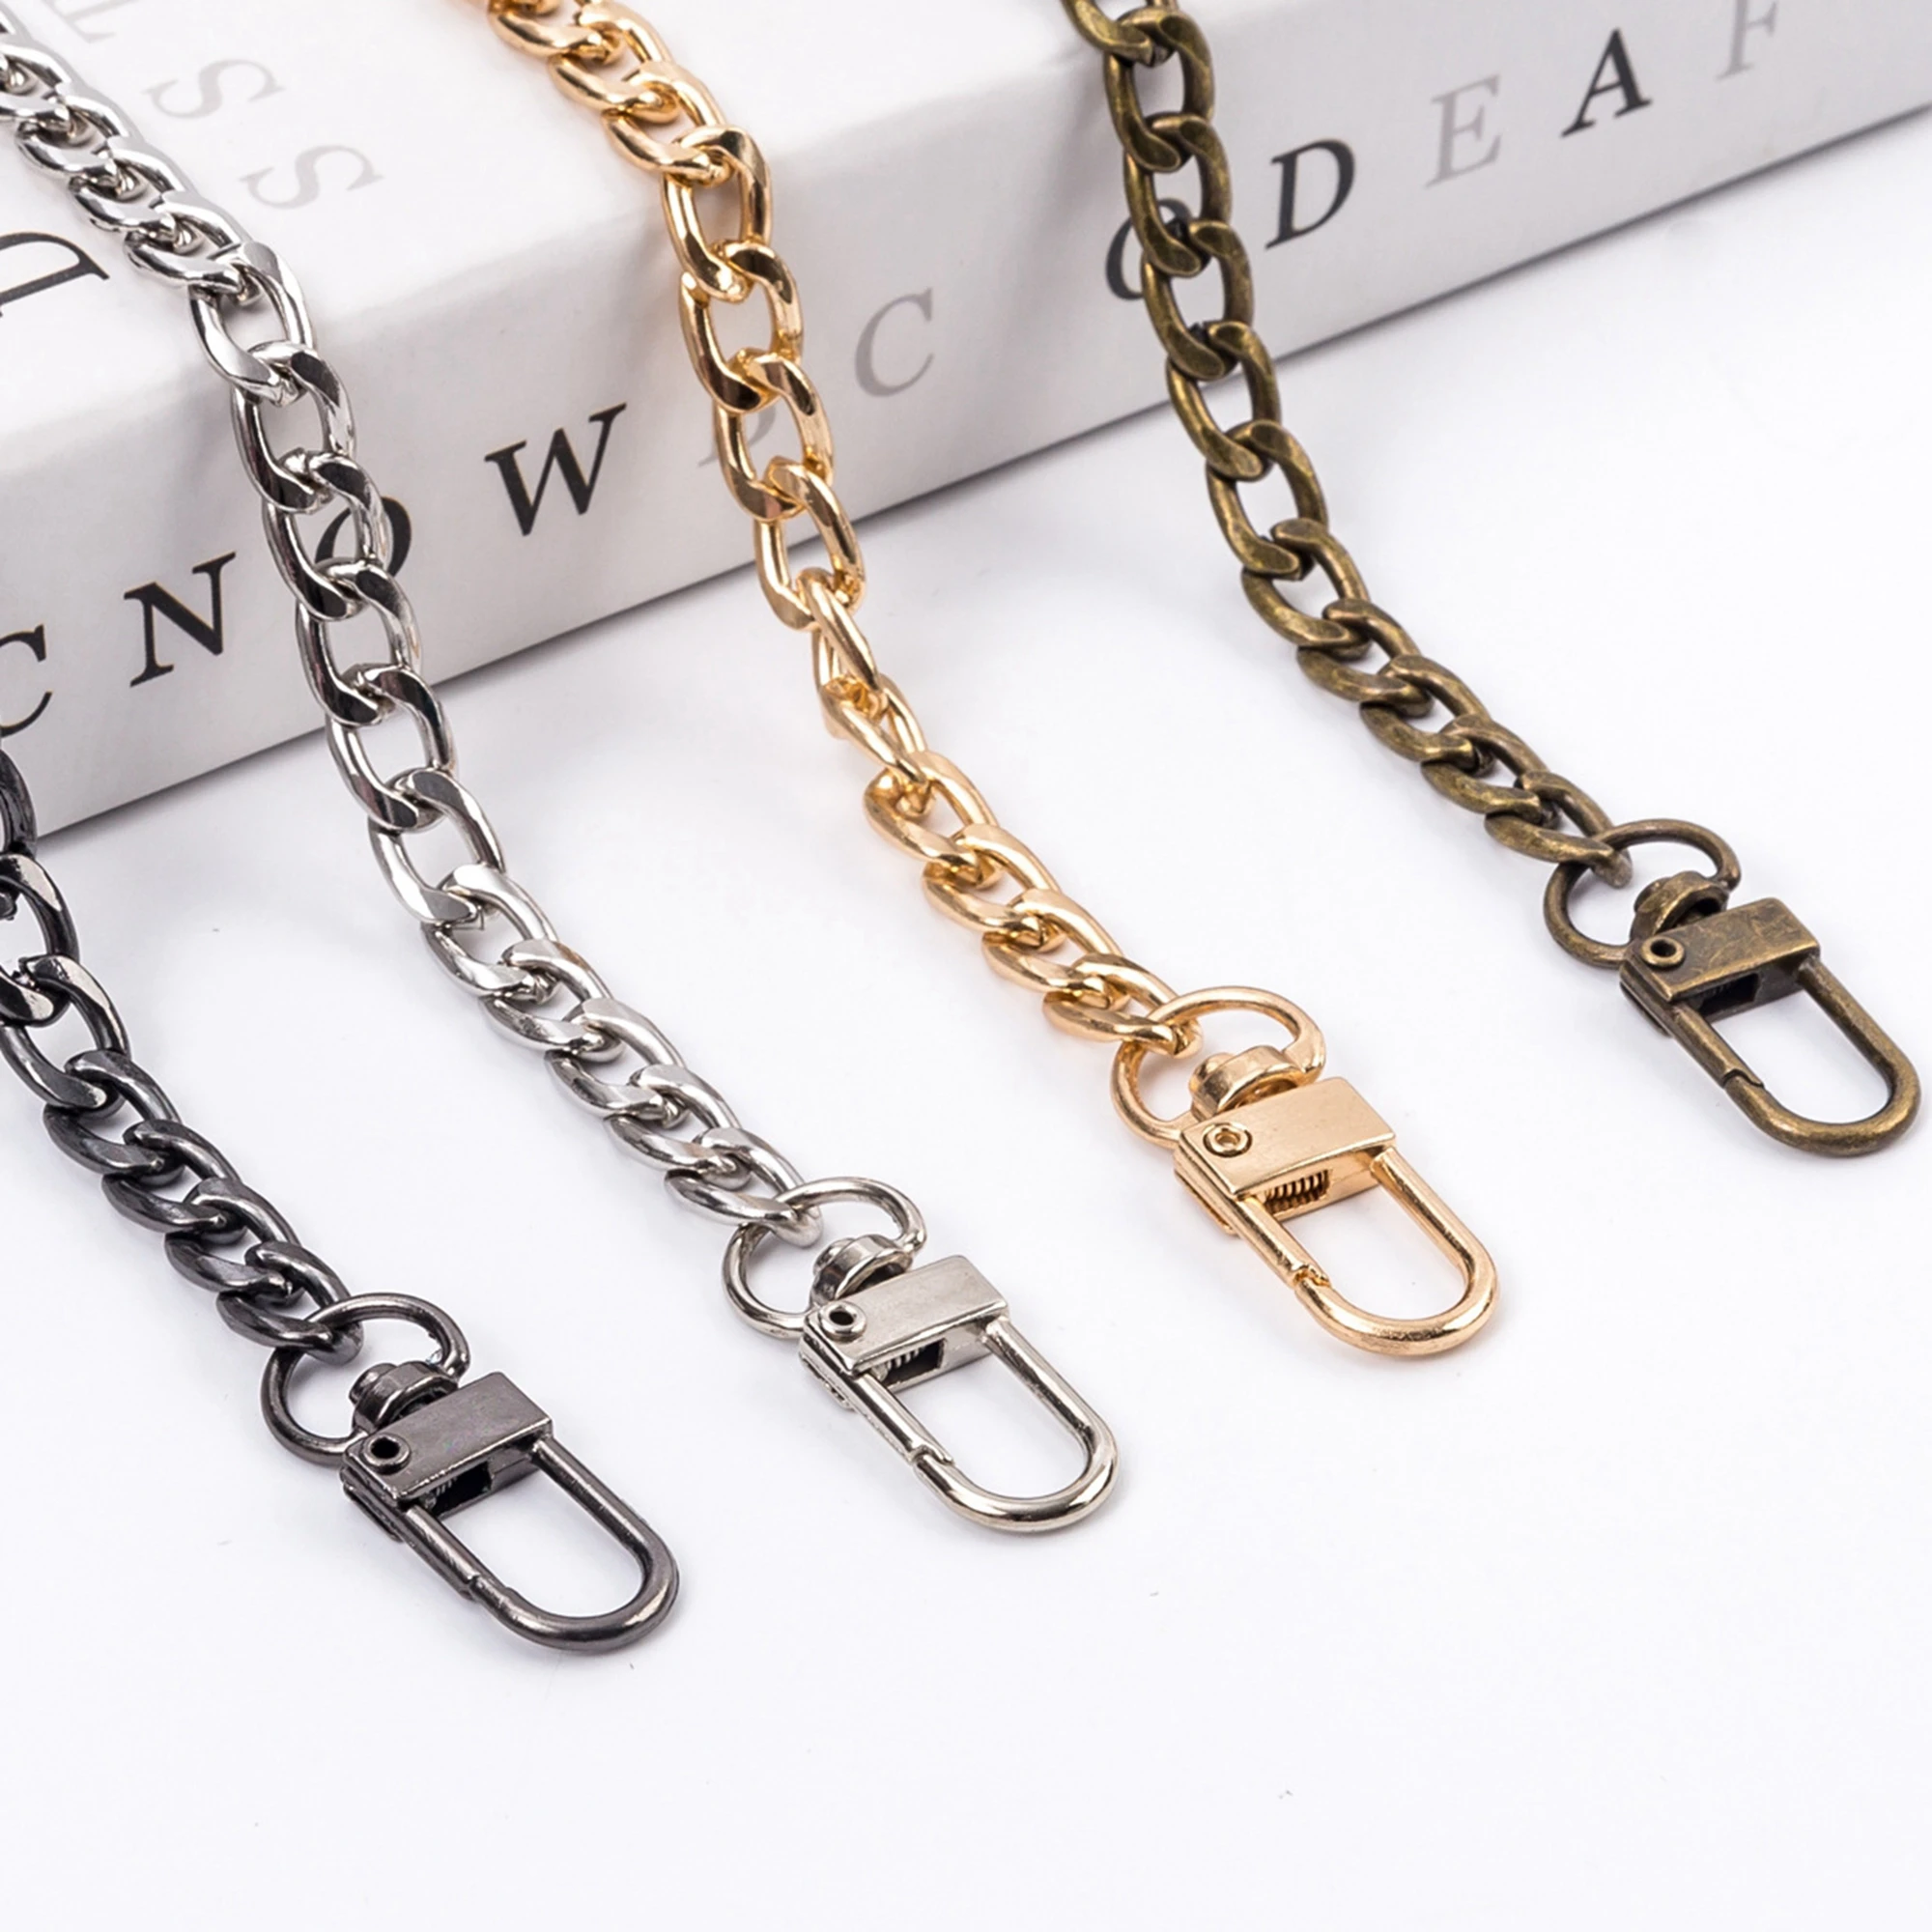 

High Quality Metal Bag Chains Purse Shoulder Handbag Chain Strap With Snap Hook, Nickel/light gold/gun black/antique brass